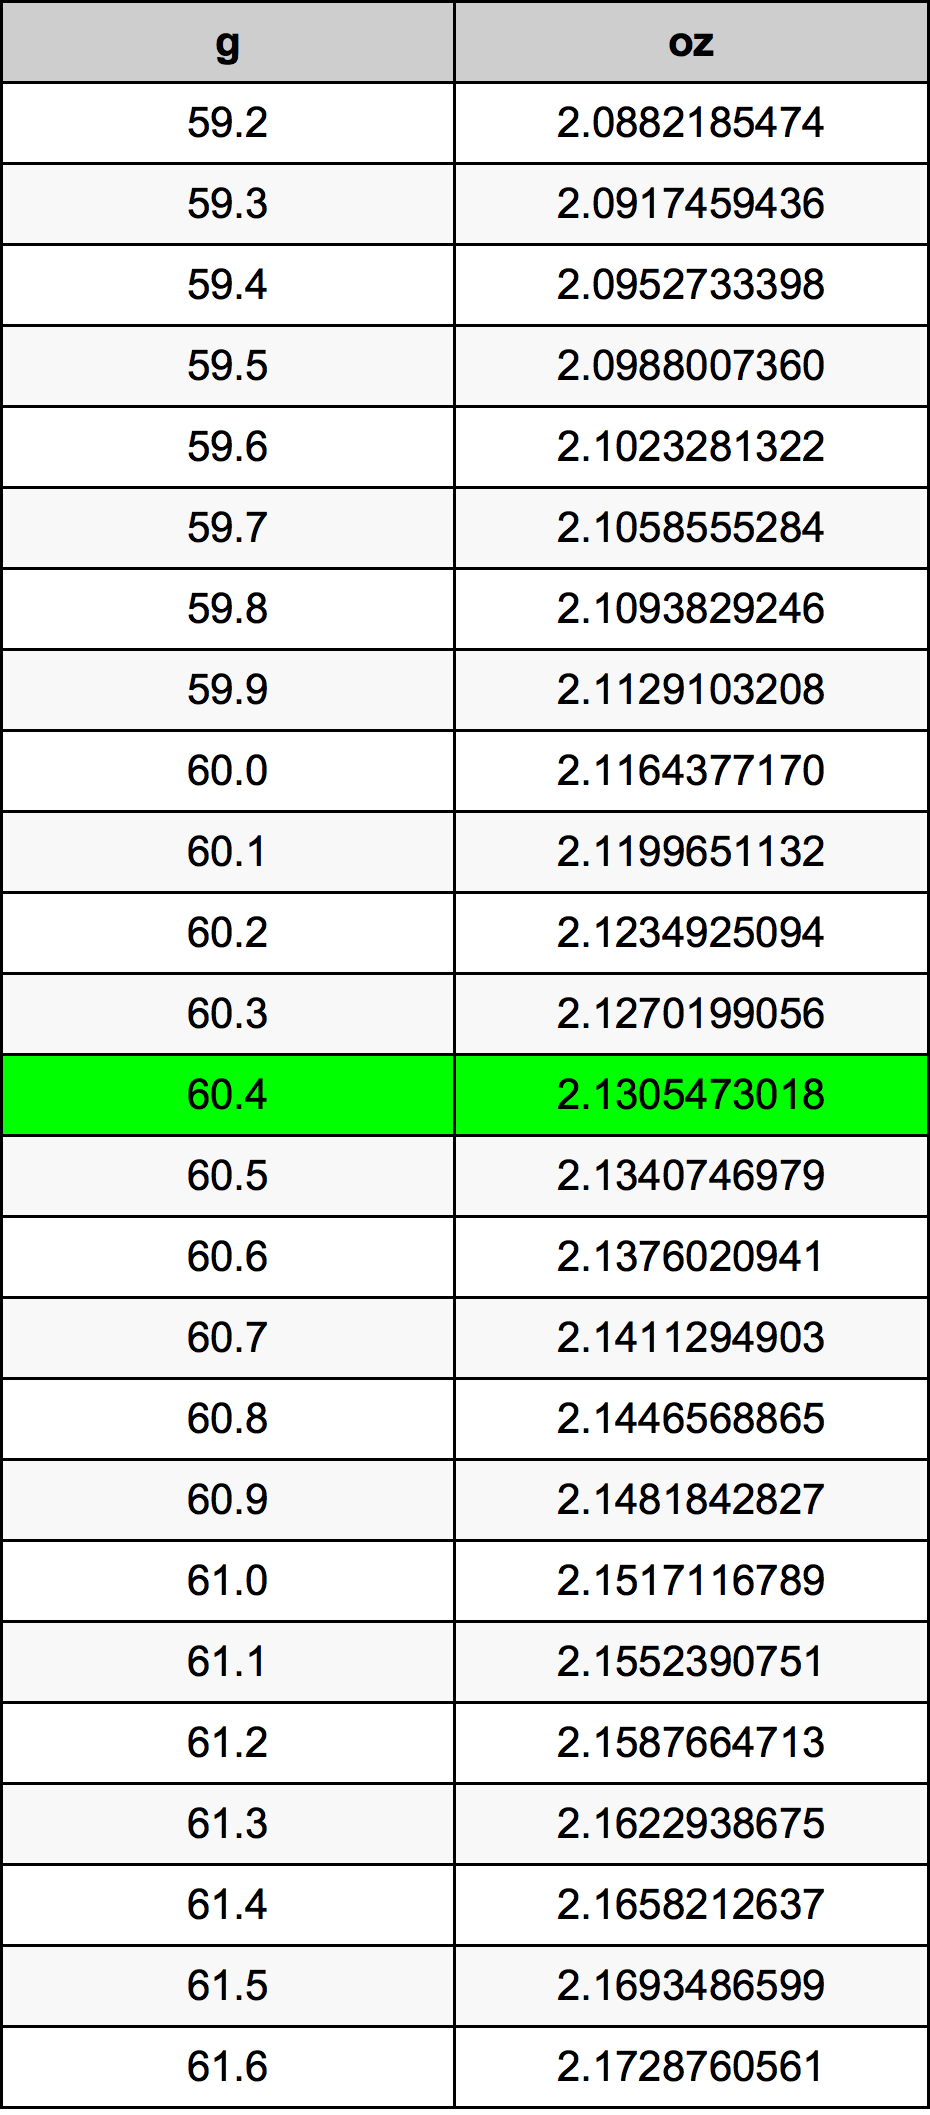 60.4 غرام جدول تحويل